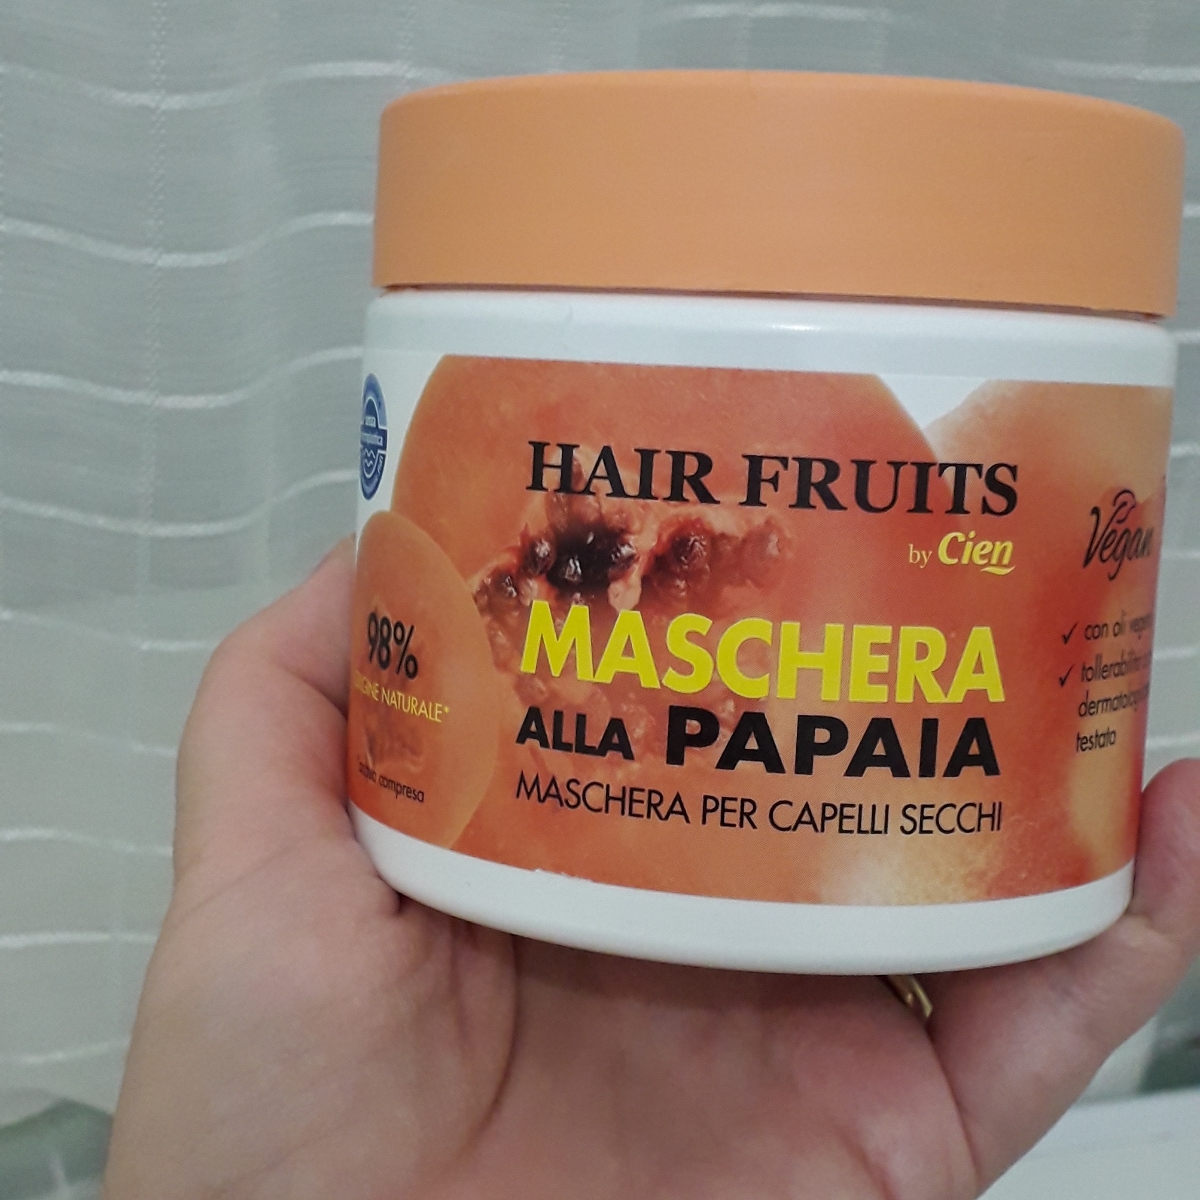 Cien Maschera alla papaya Reviews | abillion